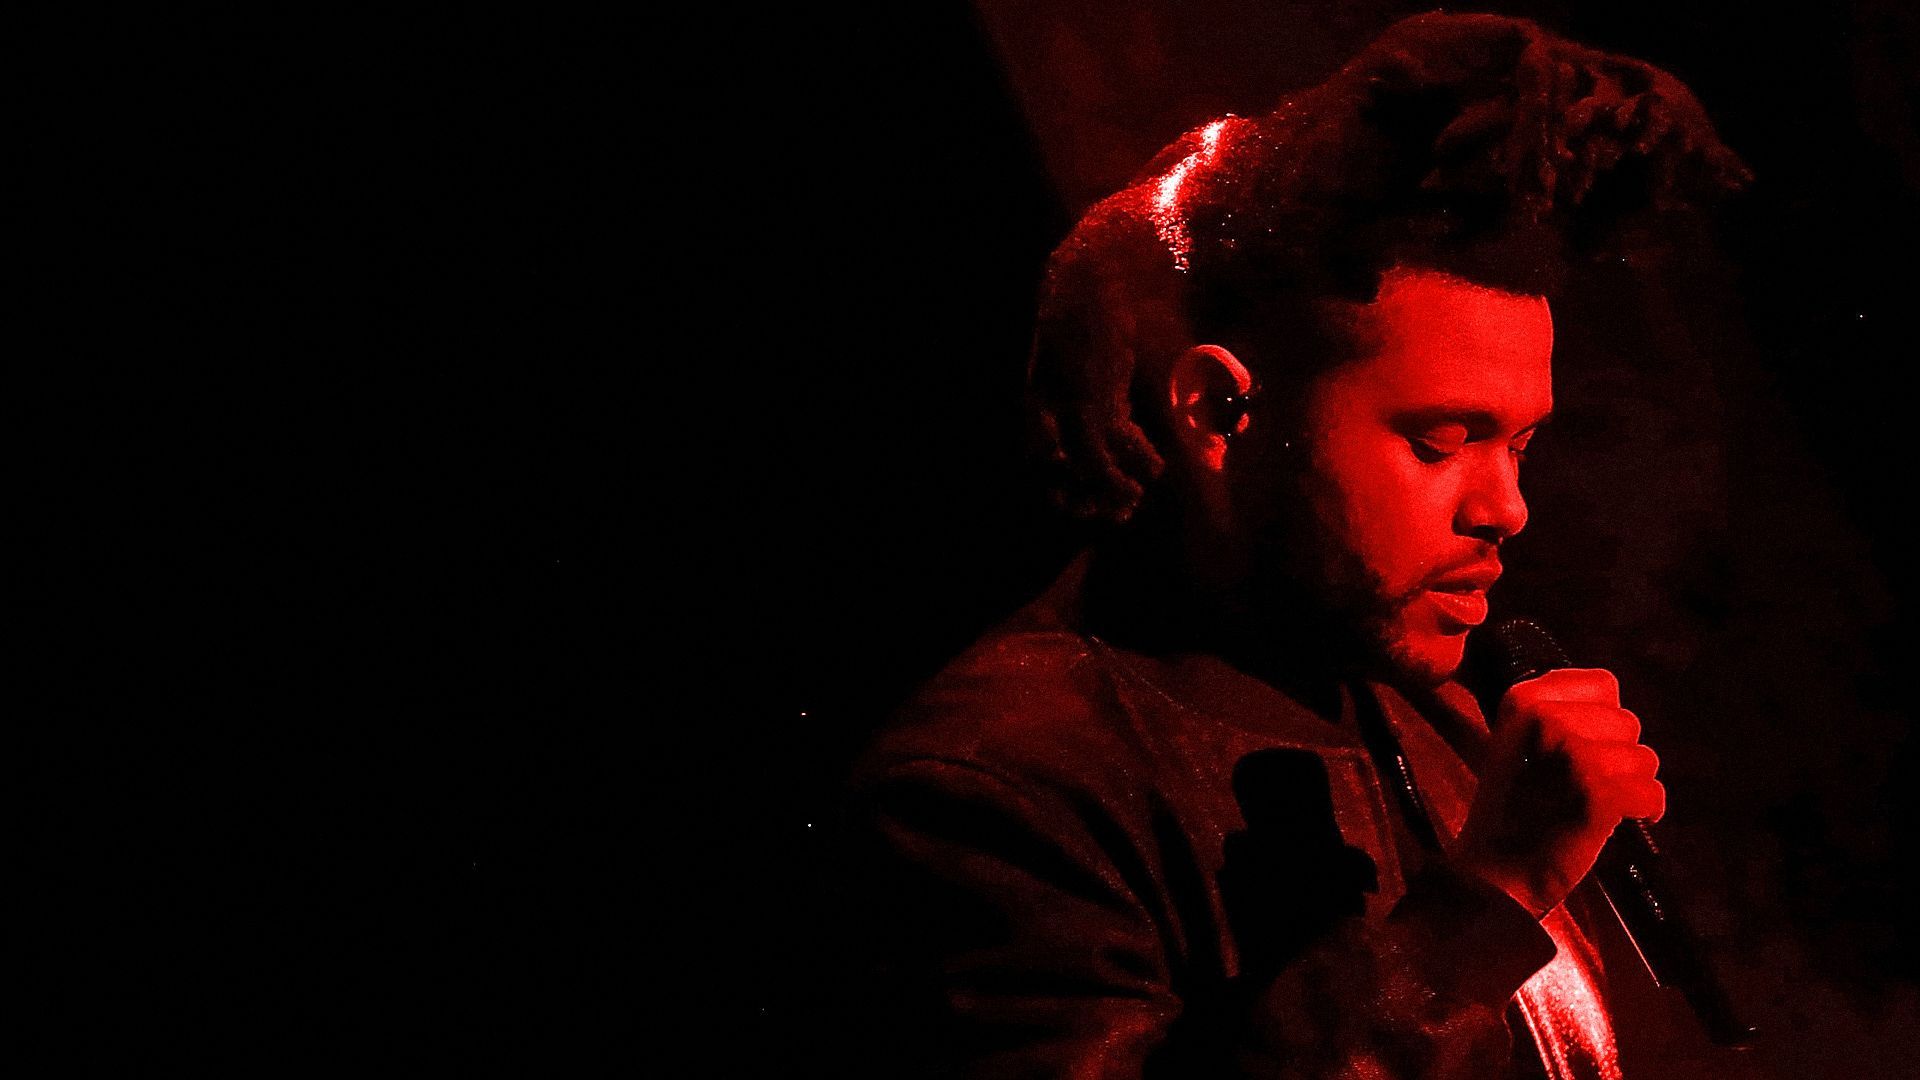 WoowPaper: Wallpaper Aesthetic The Weeknd